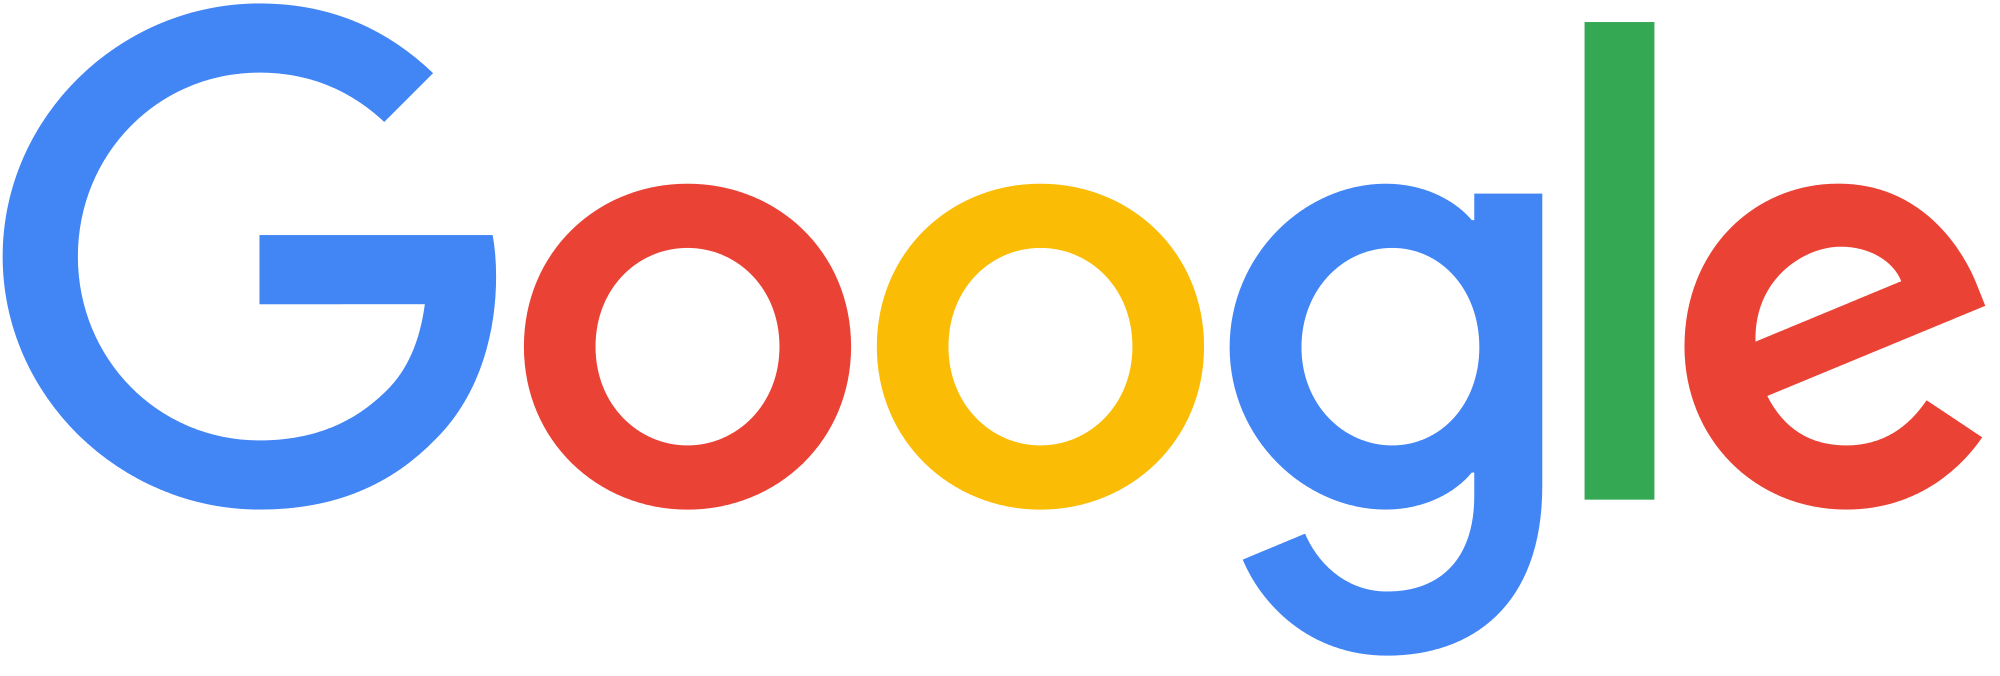 Google-2000-676.png